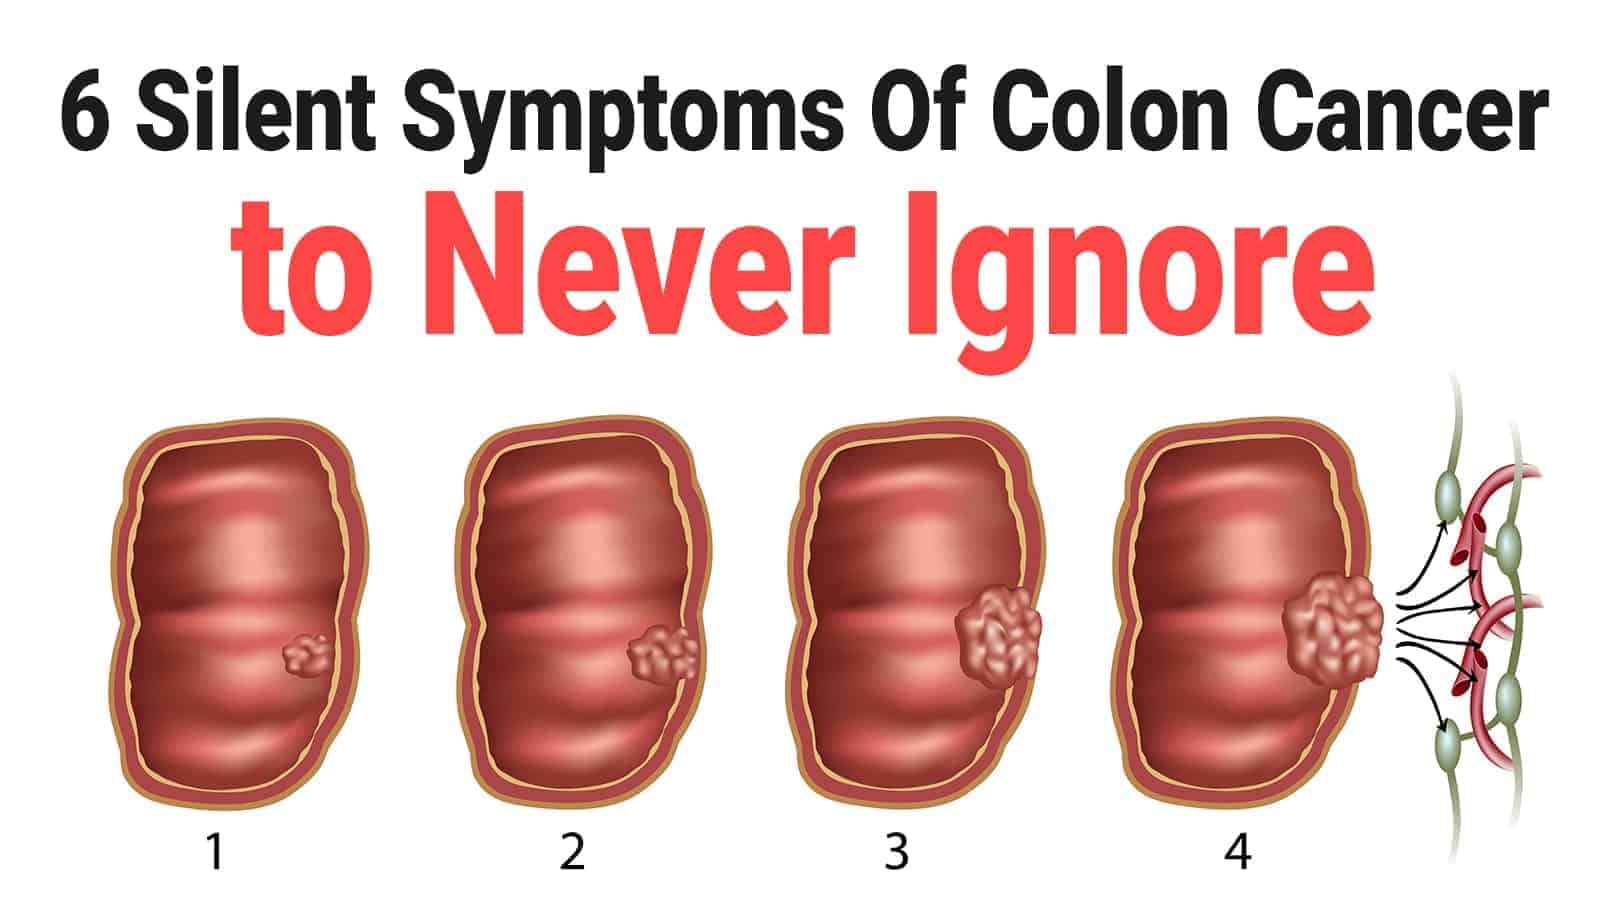 Cancer abdominal pain colon, Cancer causing abdominal pain